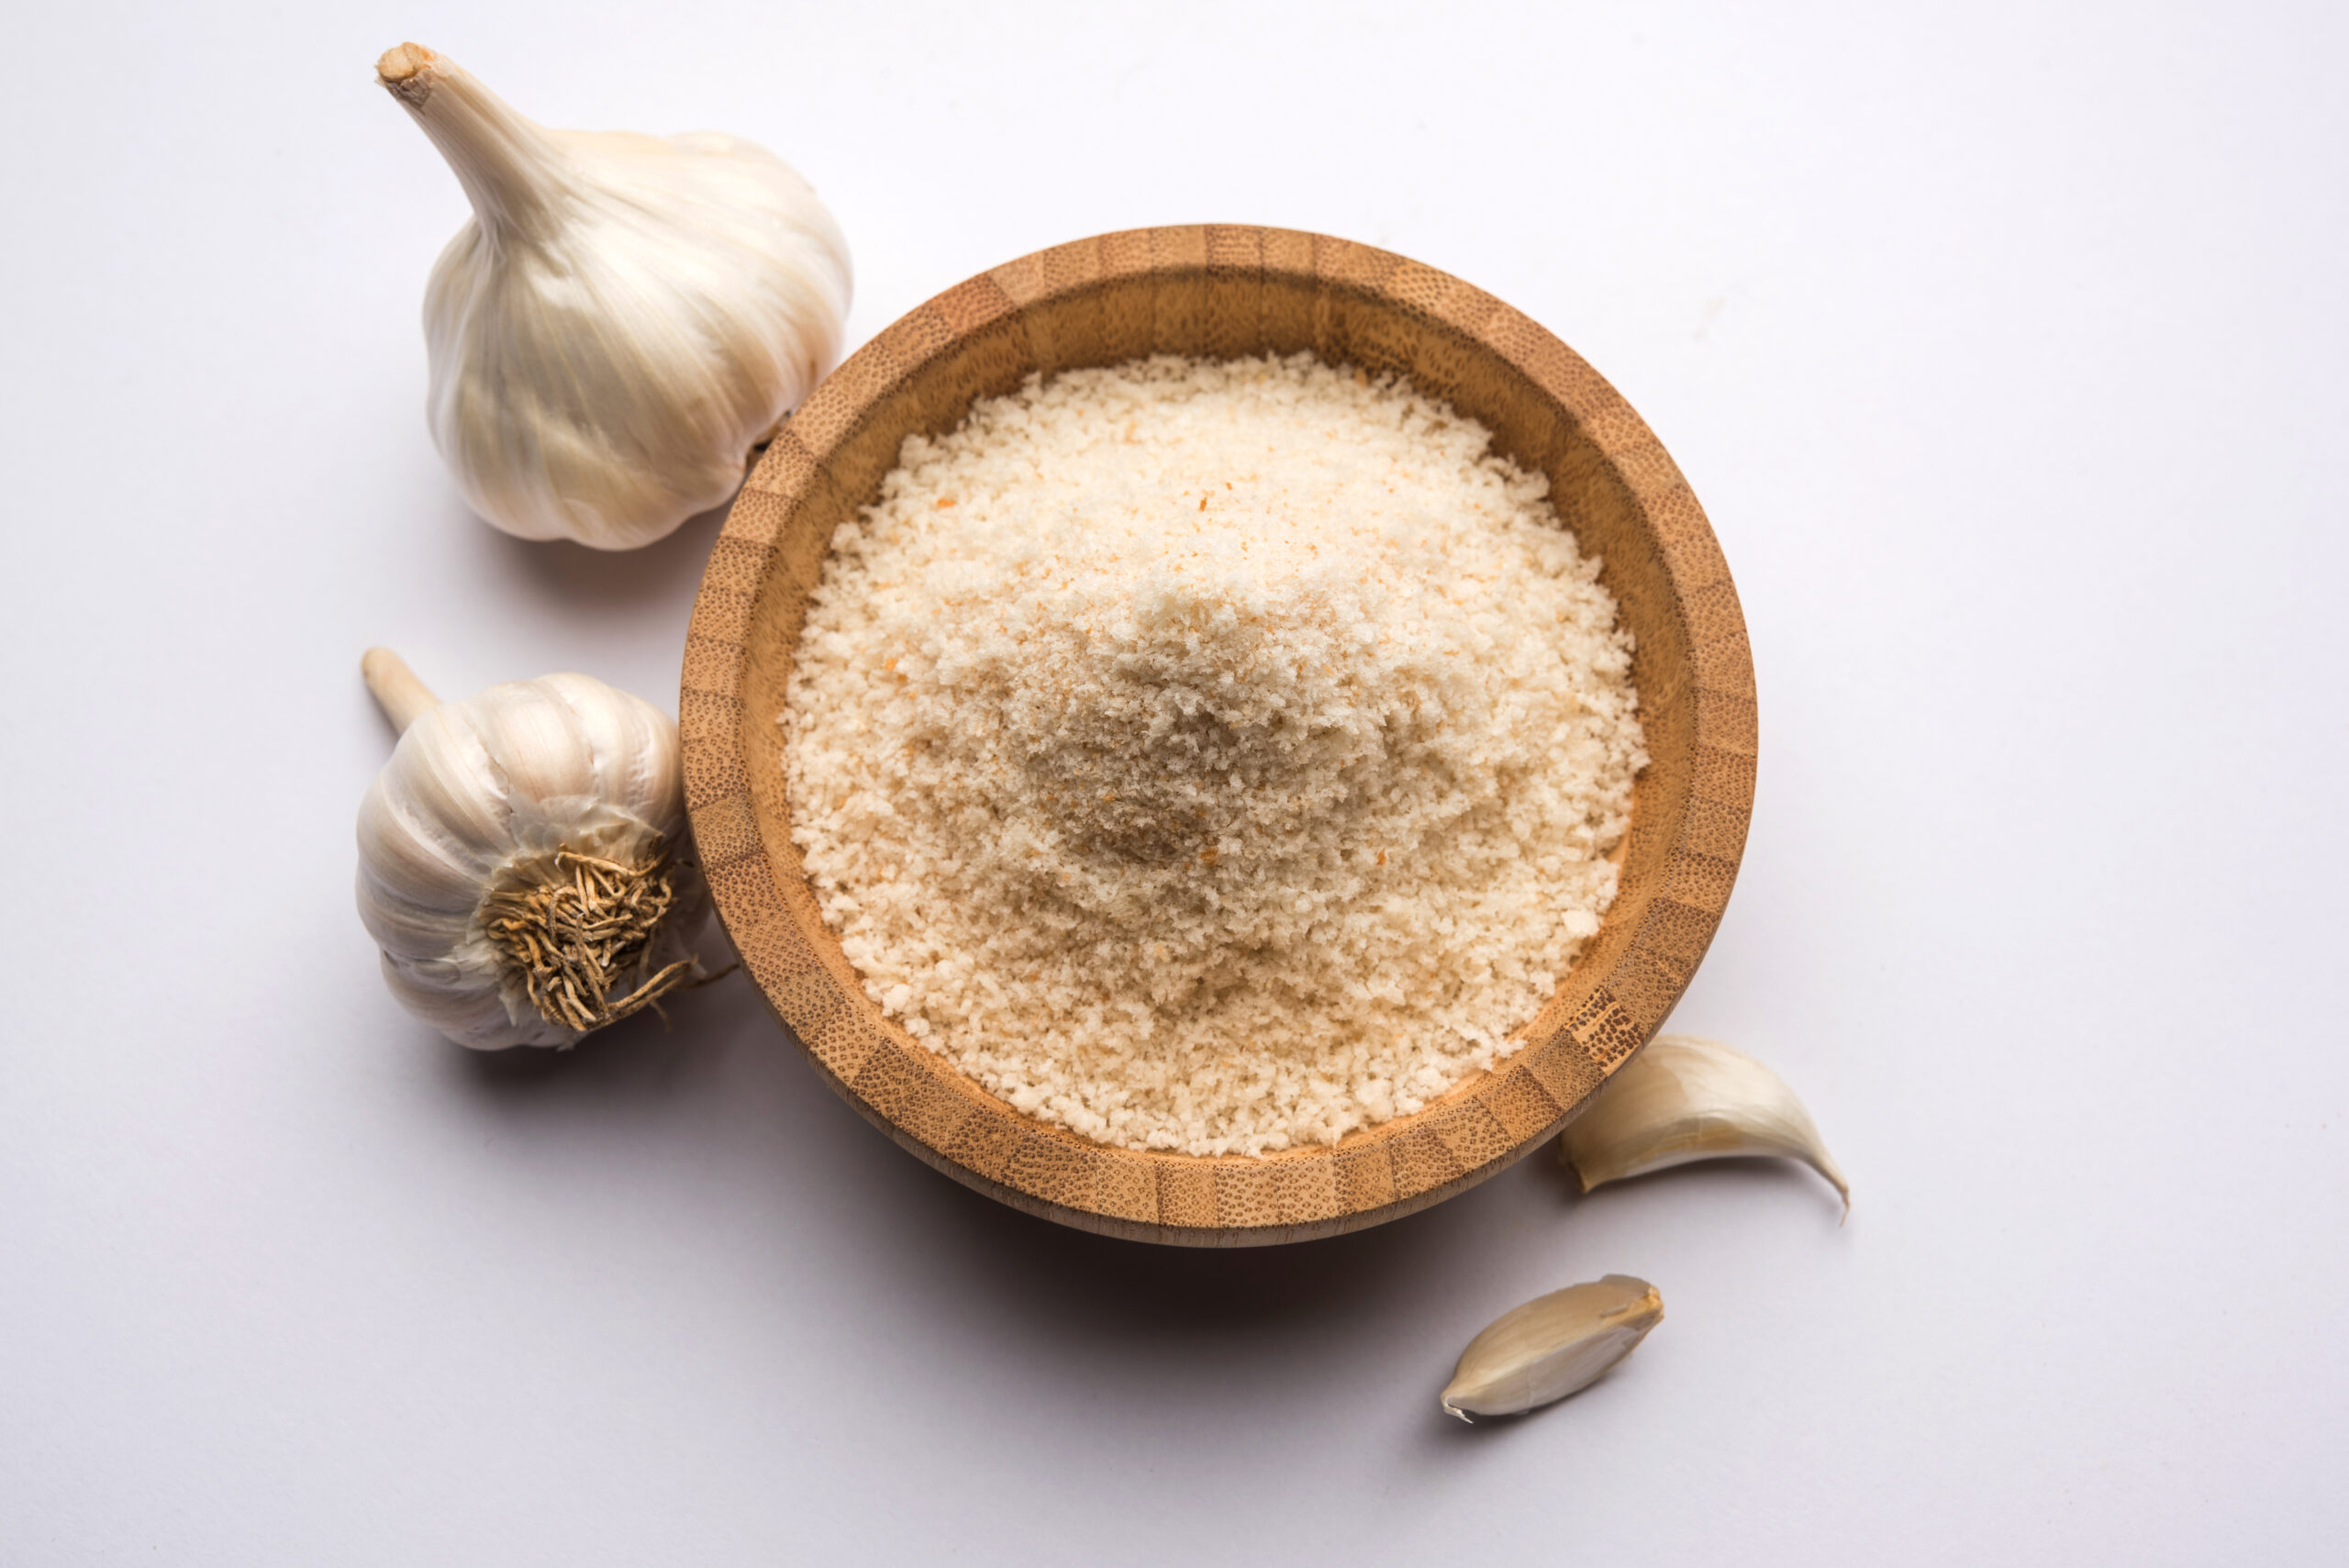 Substitute Garlic Powder for Garlic Salt